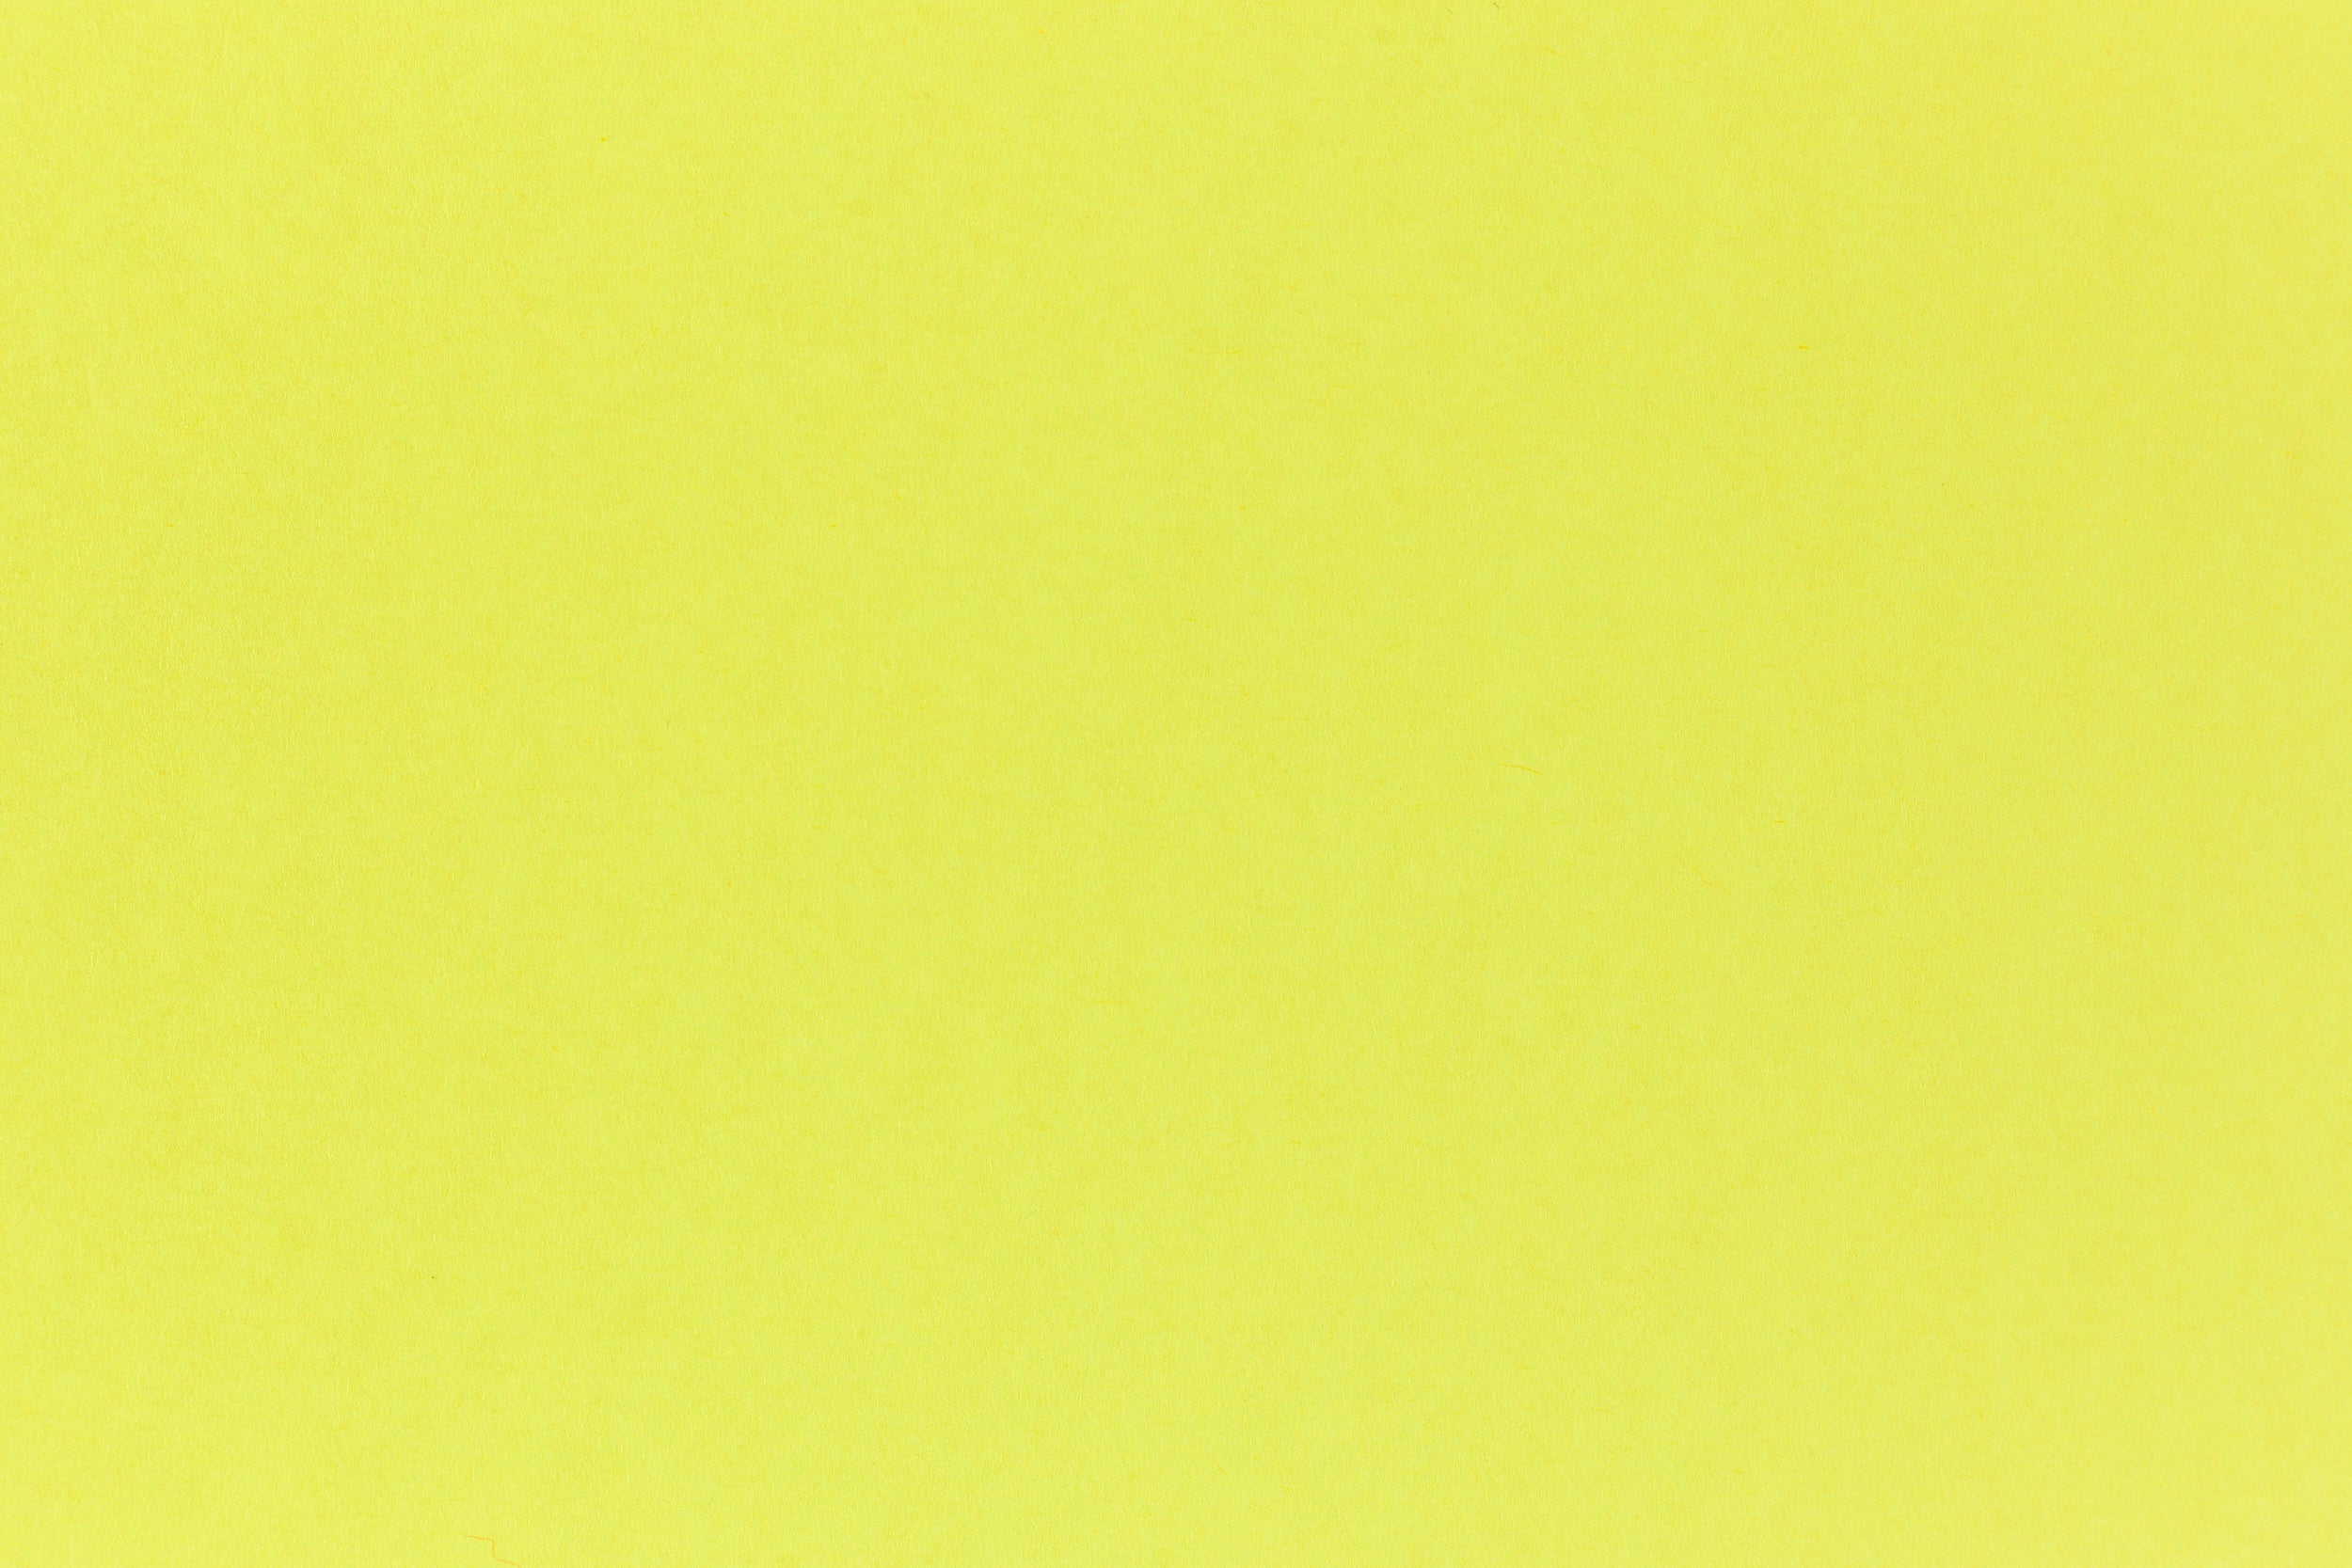 Lemon Yellow Cardstock 9x12 10/Pkg By Get Inspired